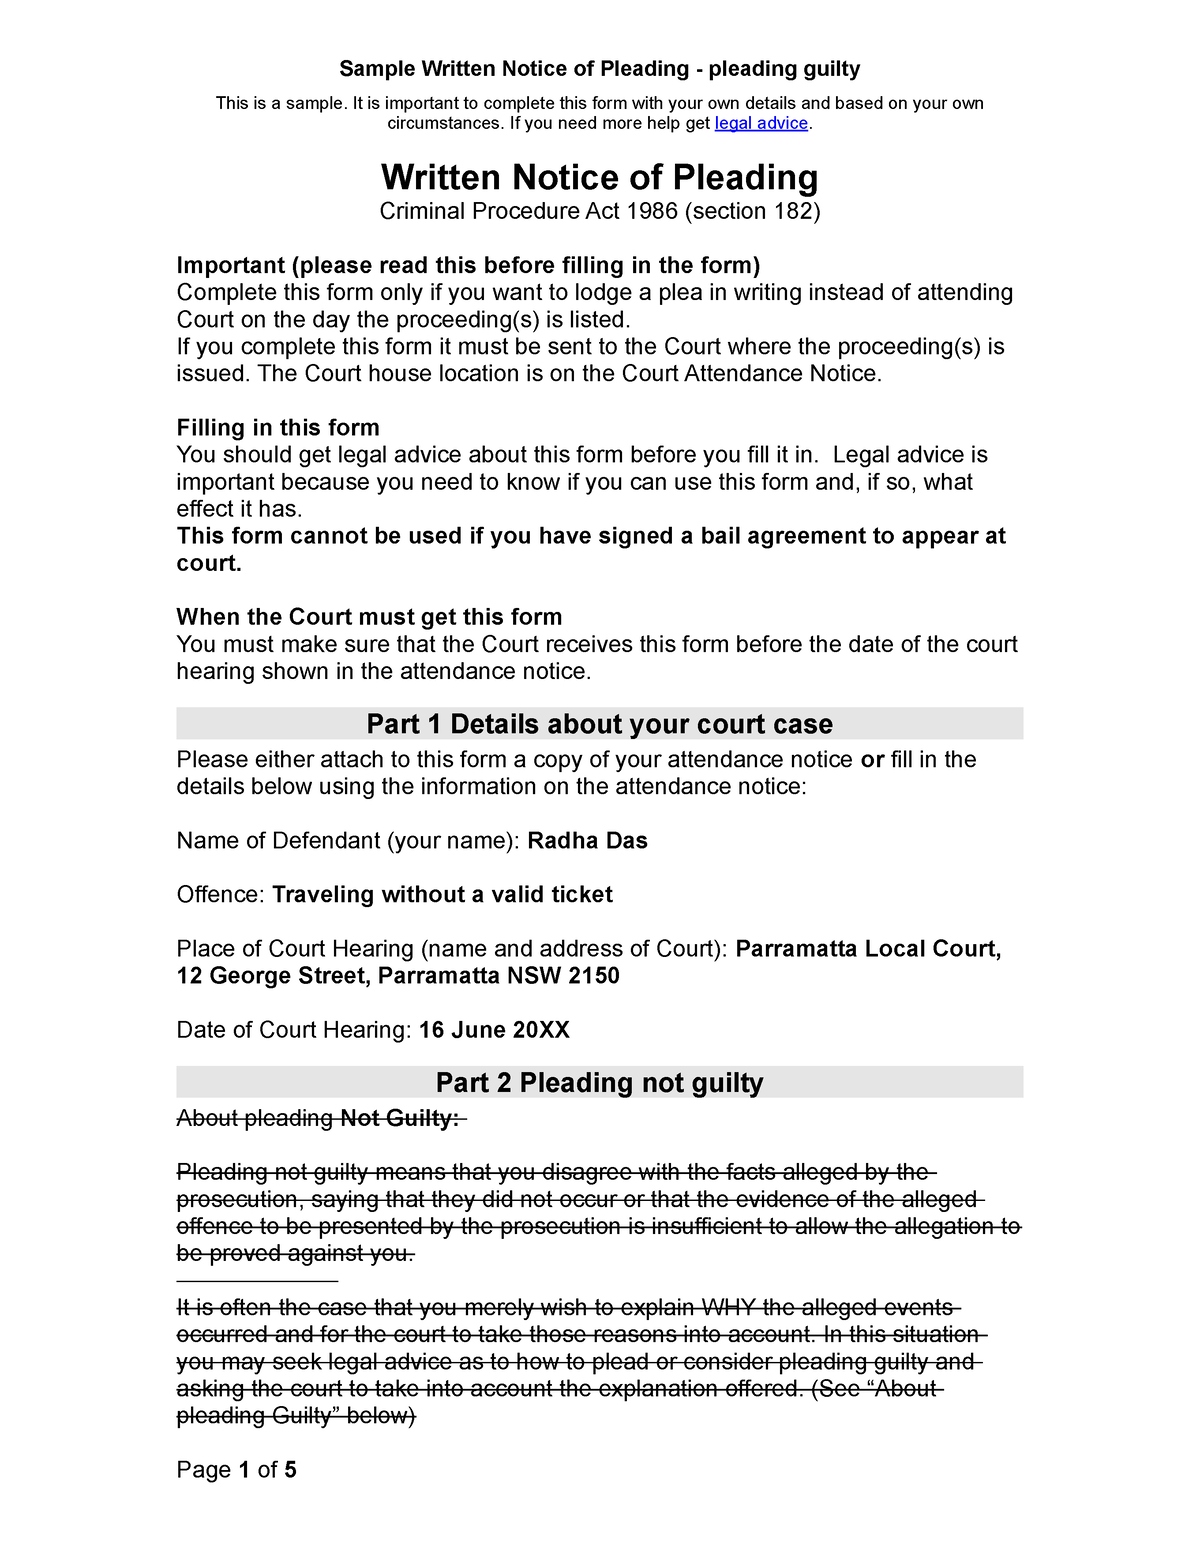 Sample written notice of pleading pleading guilty Sample Written